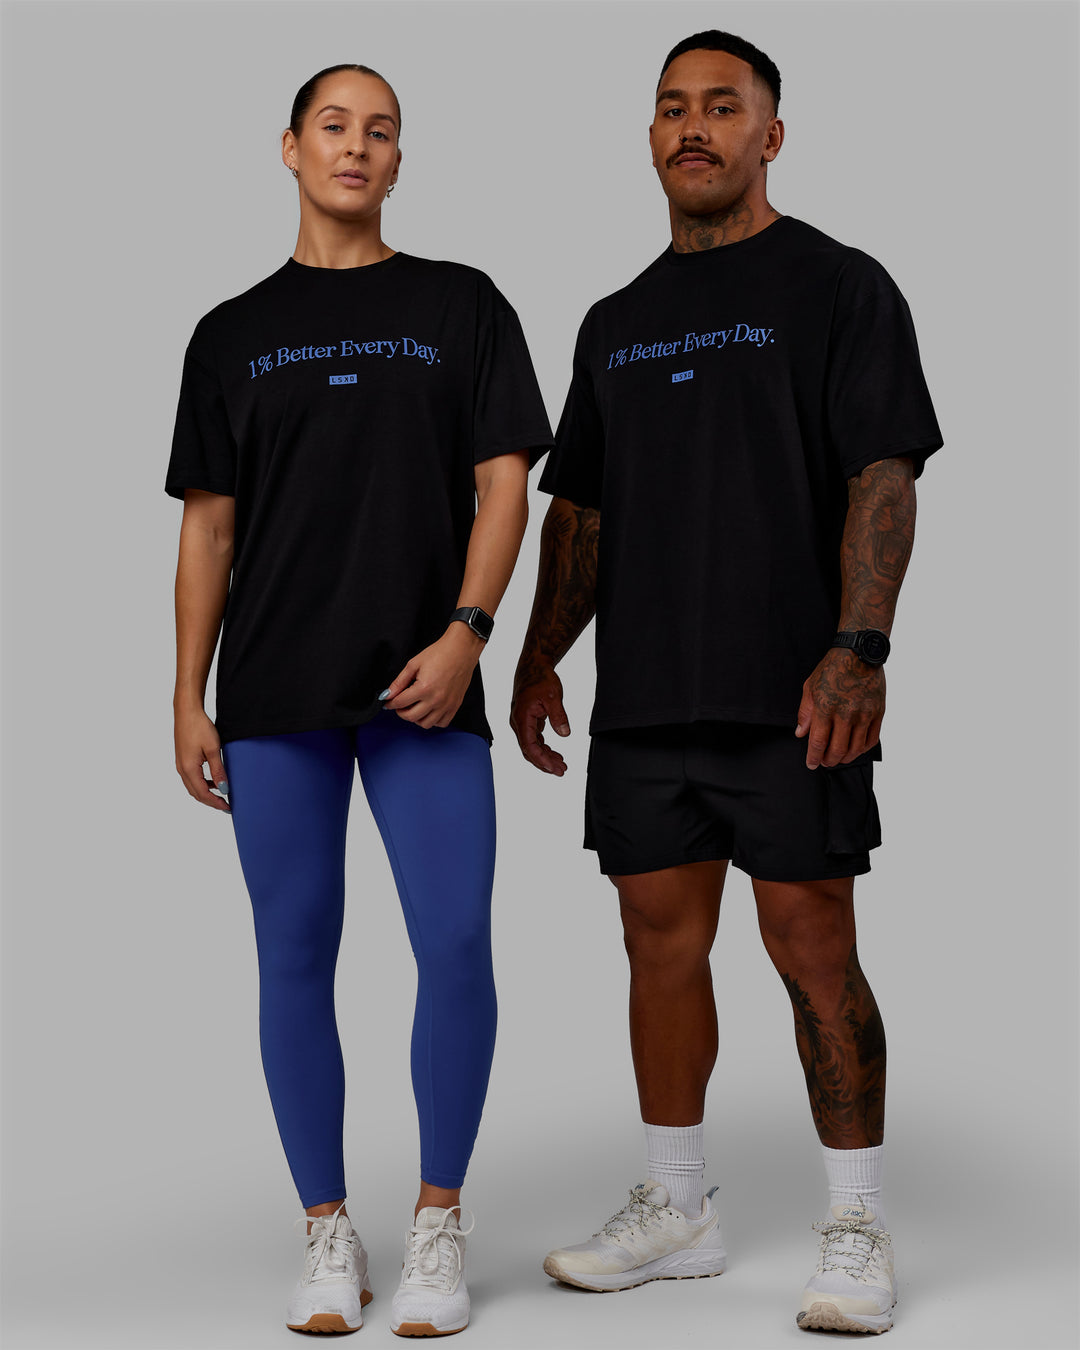 Duo wearing Unisex 1% Better FLXCotton Tee Oversize - Black-Power Cobalt